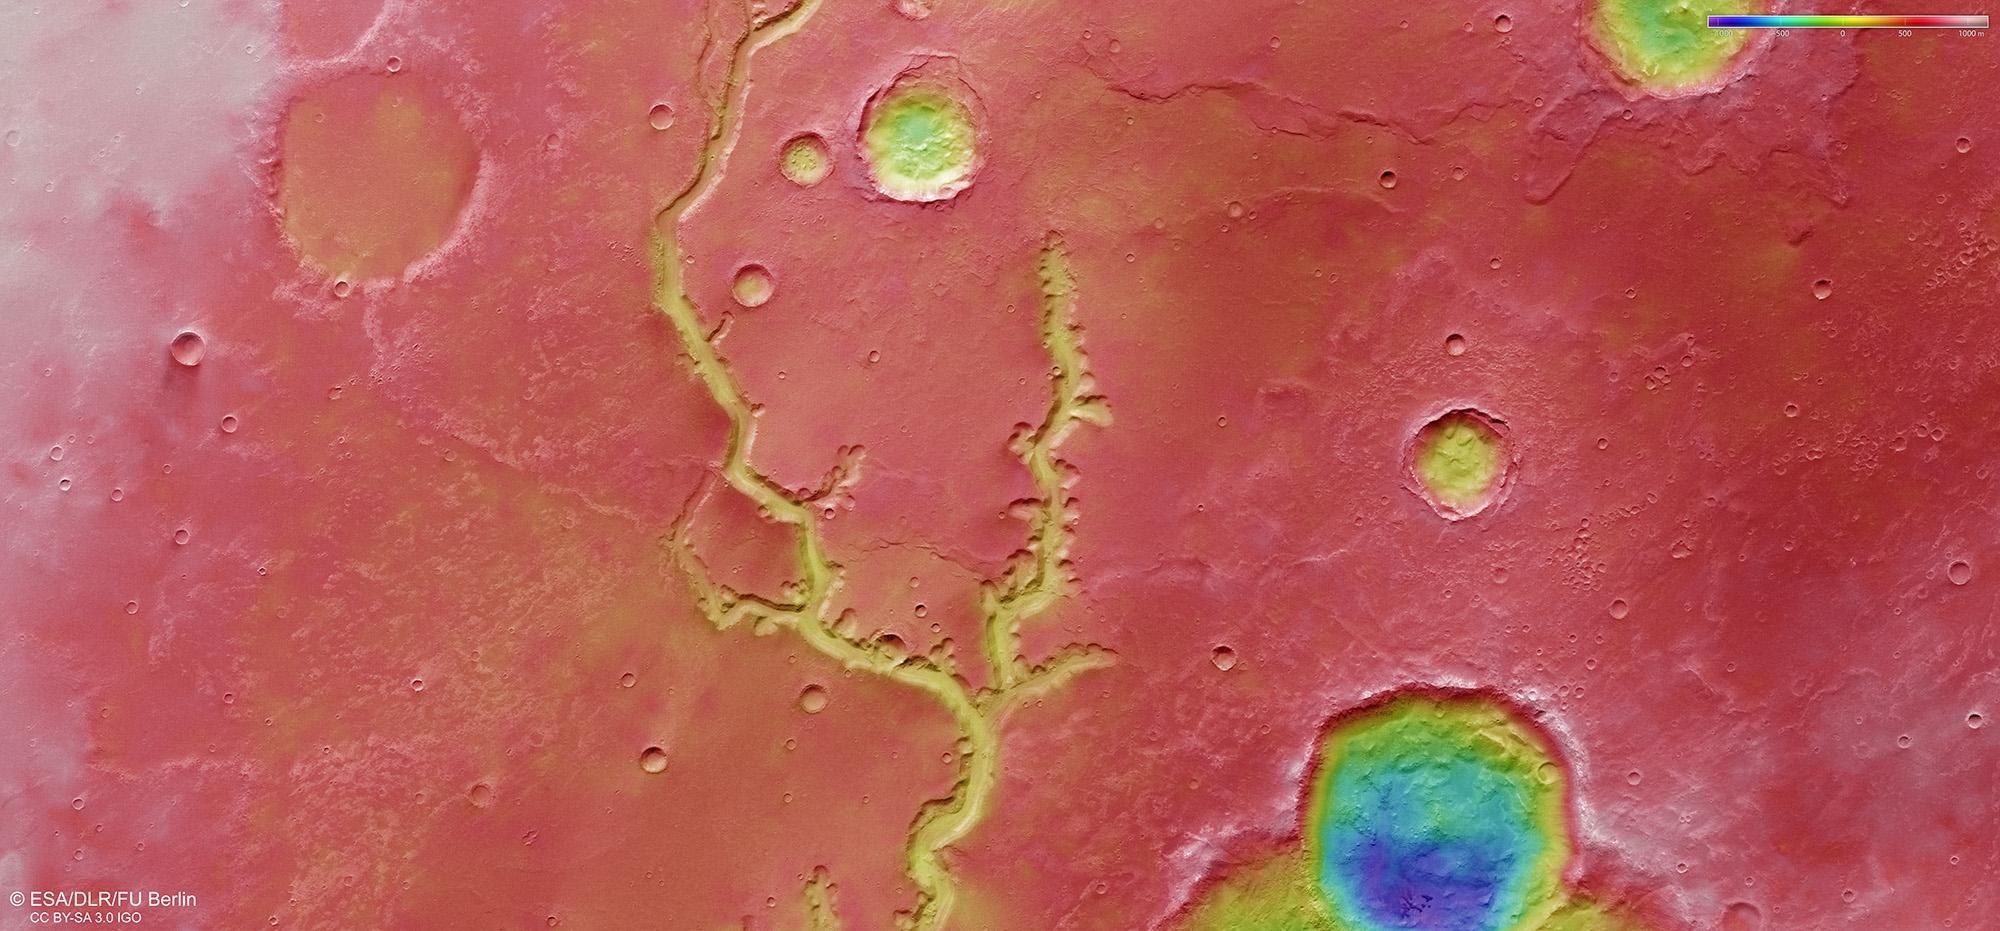 Topographic image map showing part of Nirgal Vallis